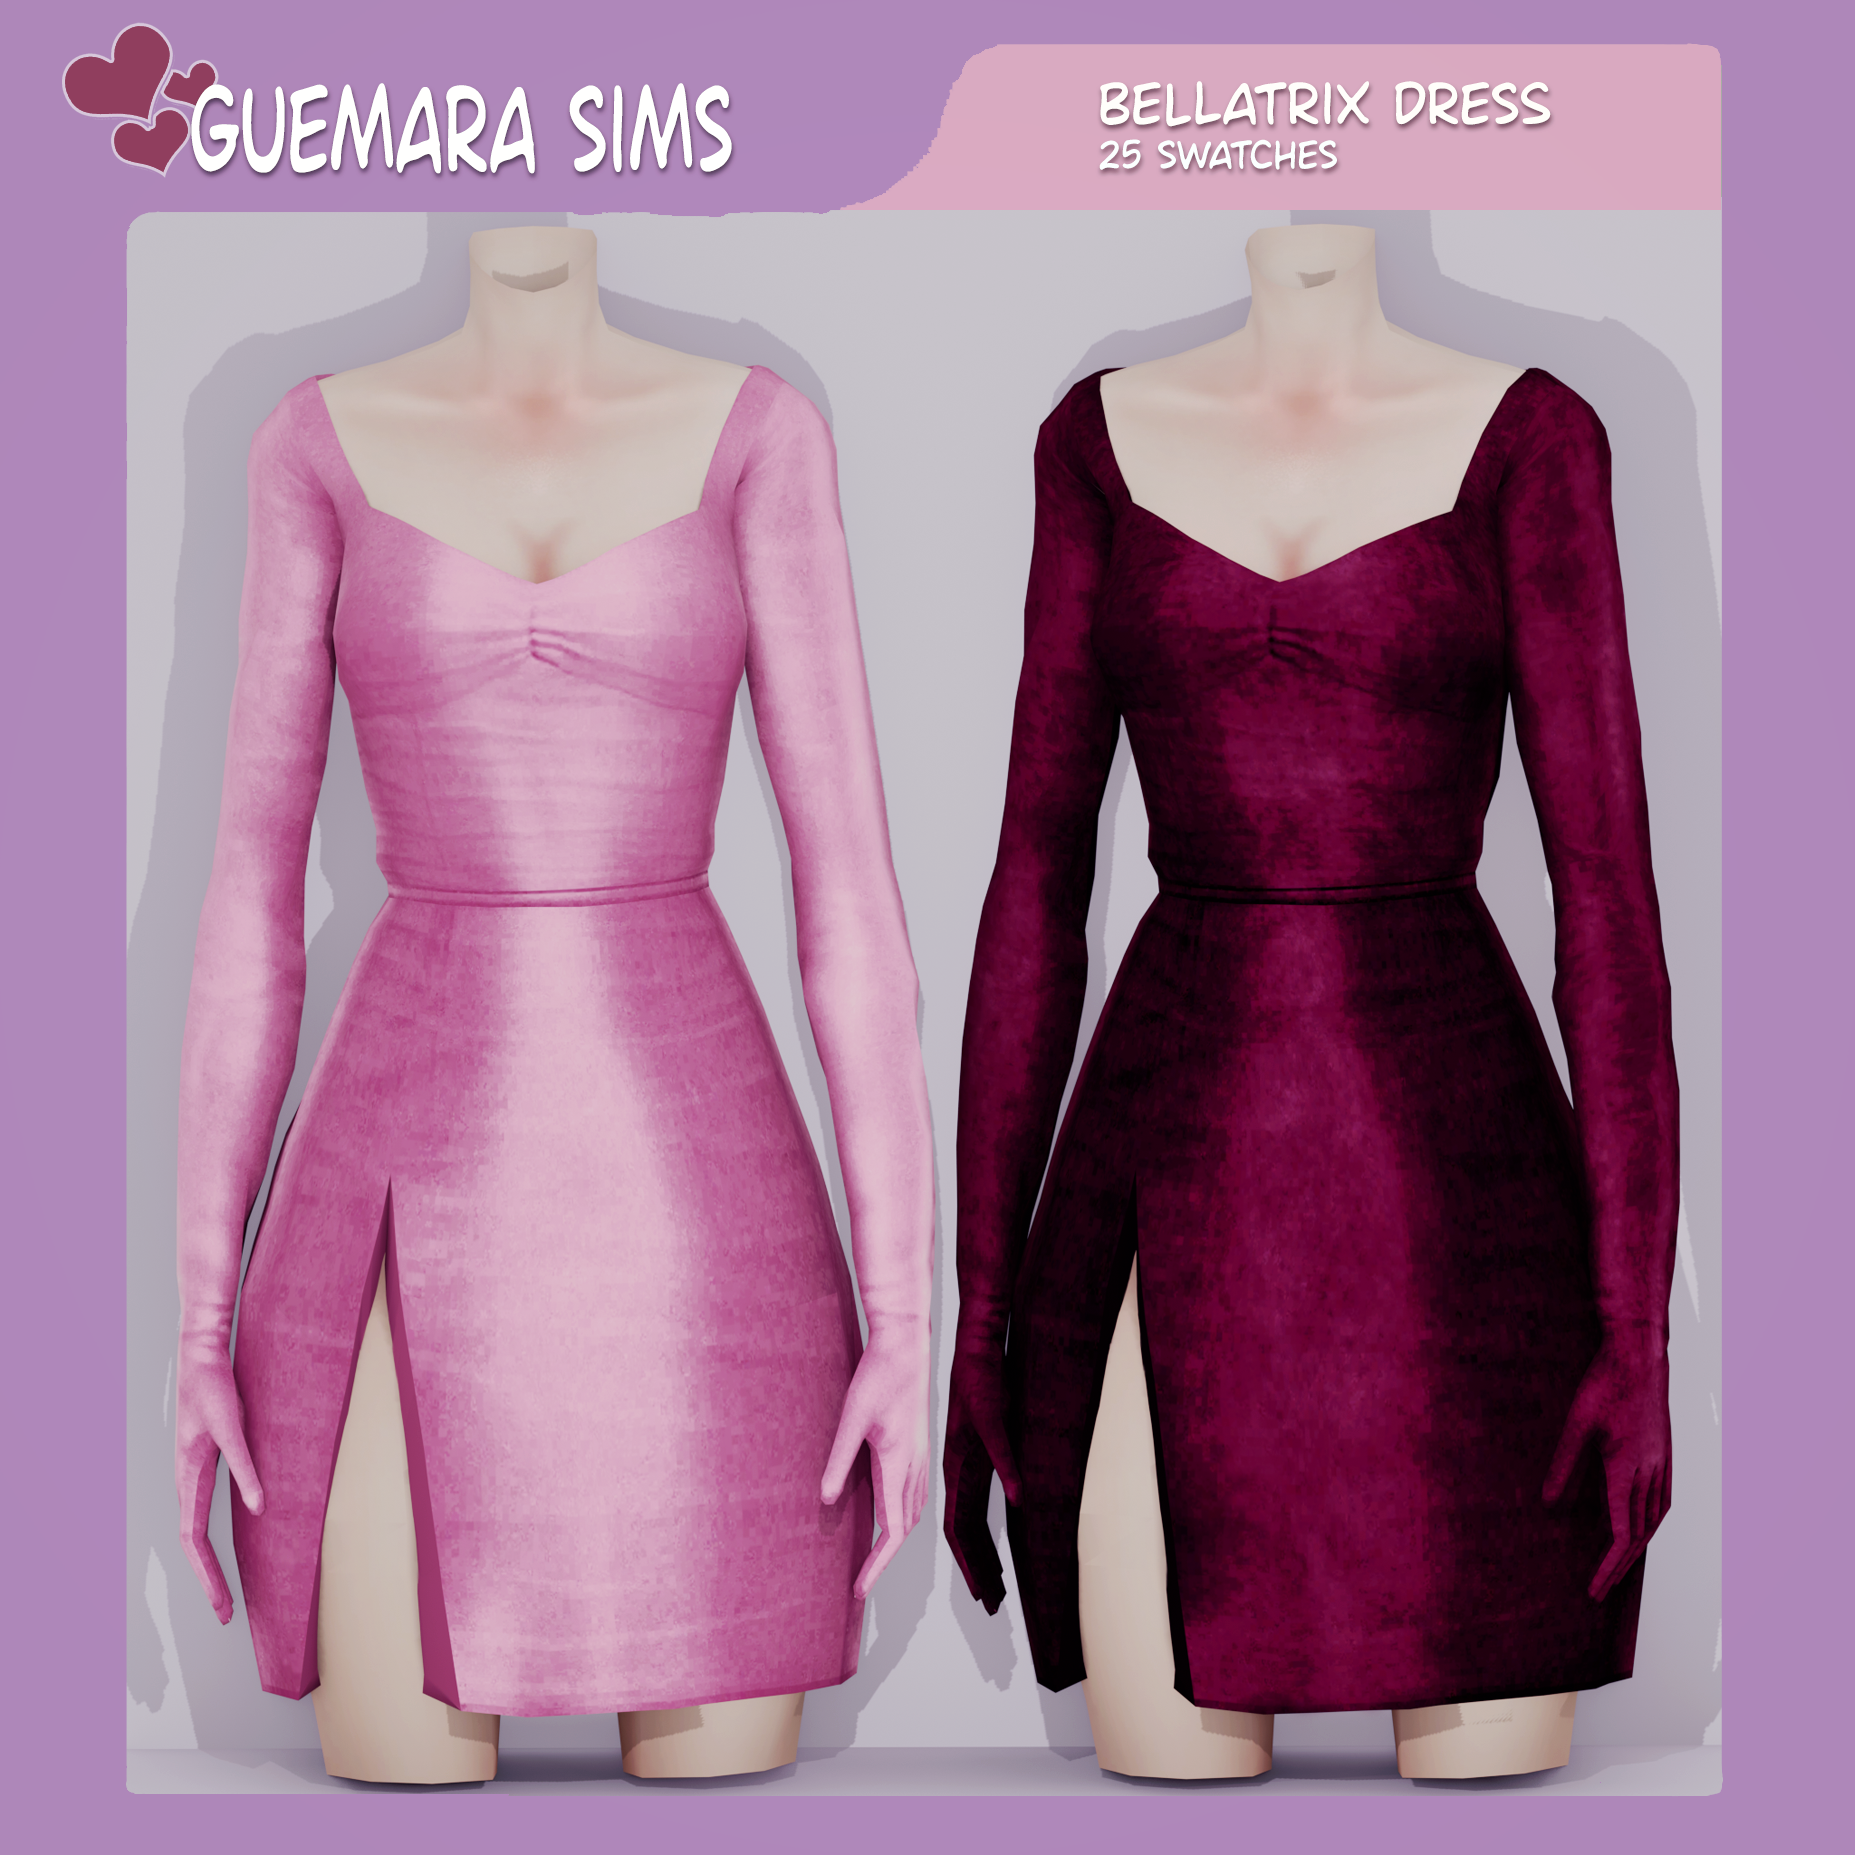 Carmilla dress - The Sims 4 Create a Sim - CurseForge